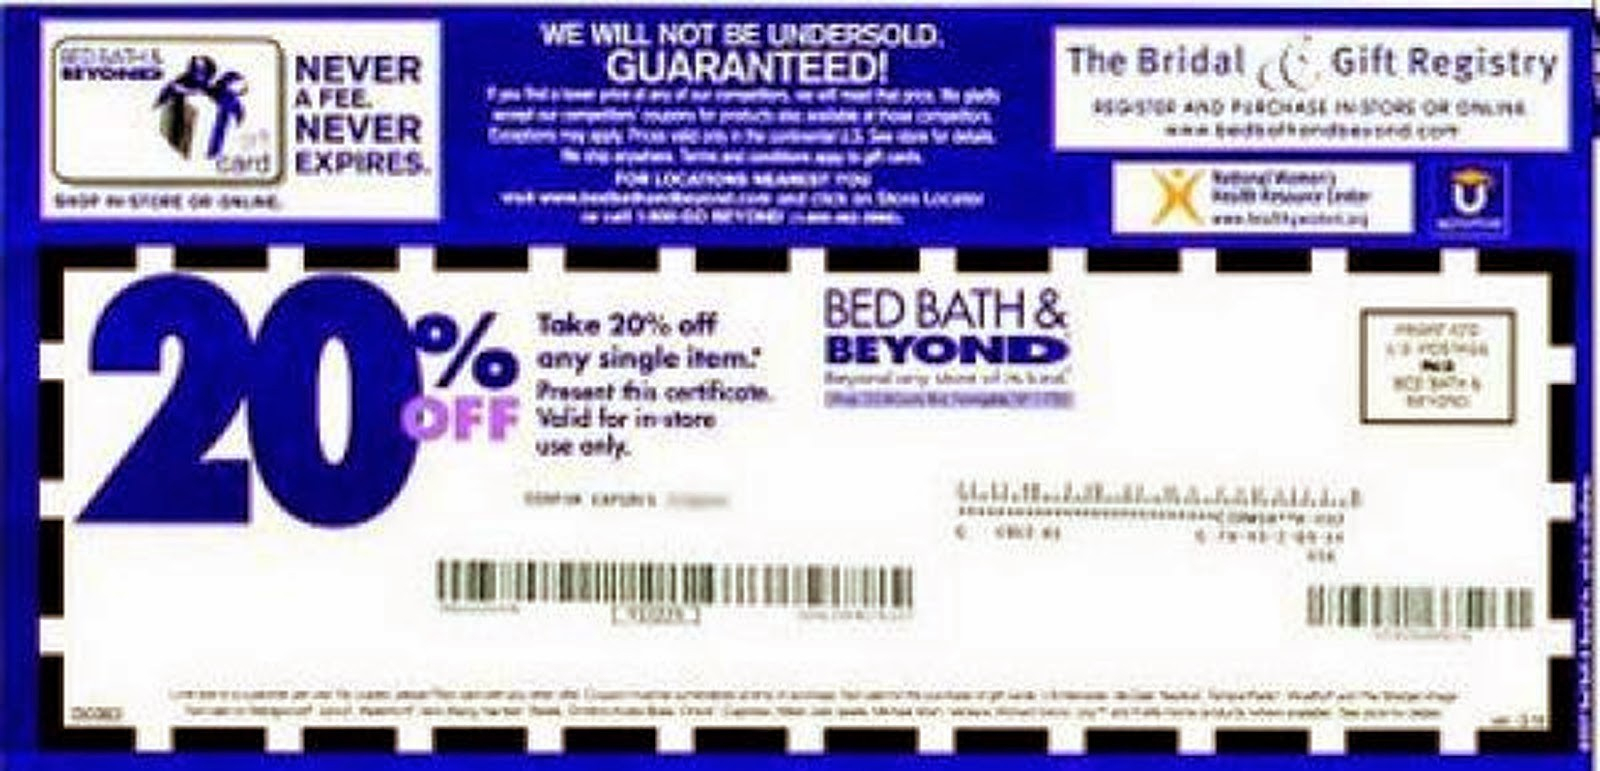 Bed Bath And Beyond Coupons 20 Off Printable Coupon - Mysembalun - Free Printable Bed Bath And Beyond 20 Off Coupon